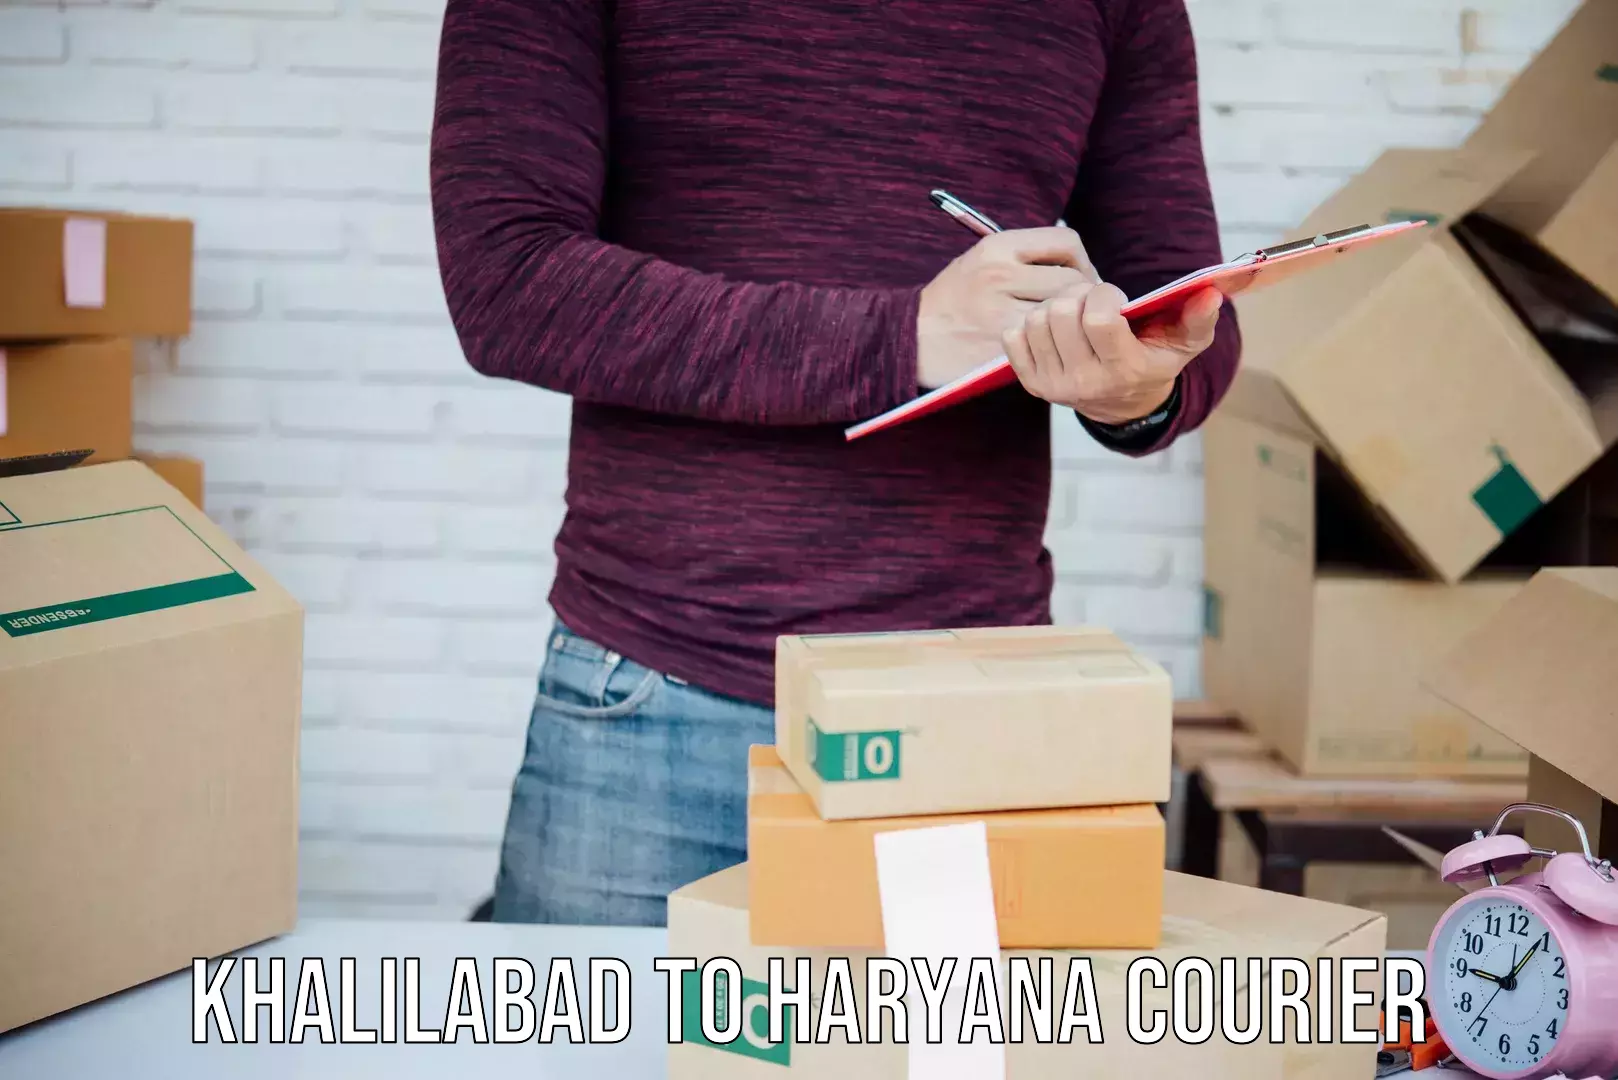 Affordable parcel service Khalilabad to Haryana